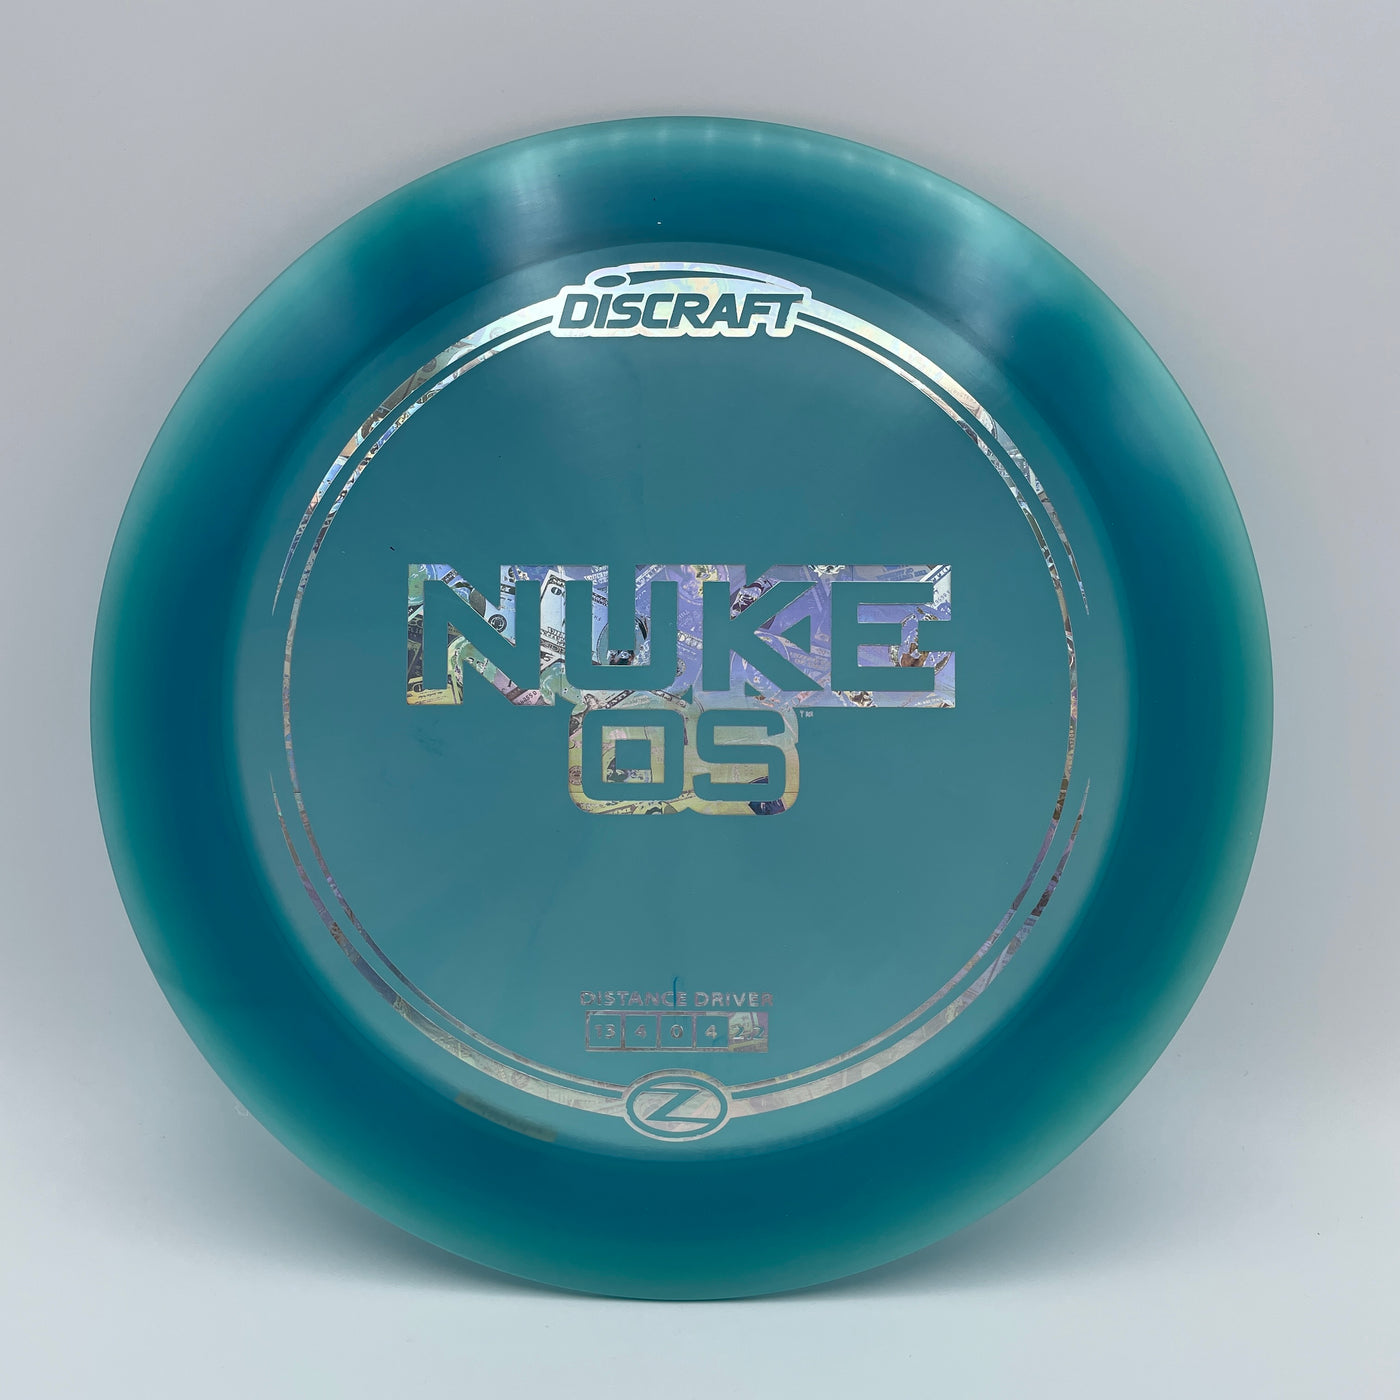 Z Line Nuke OS